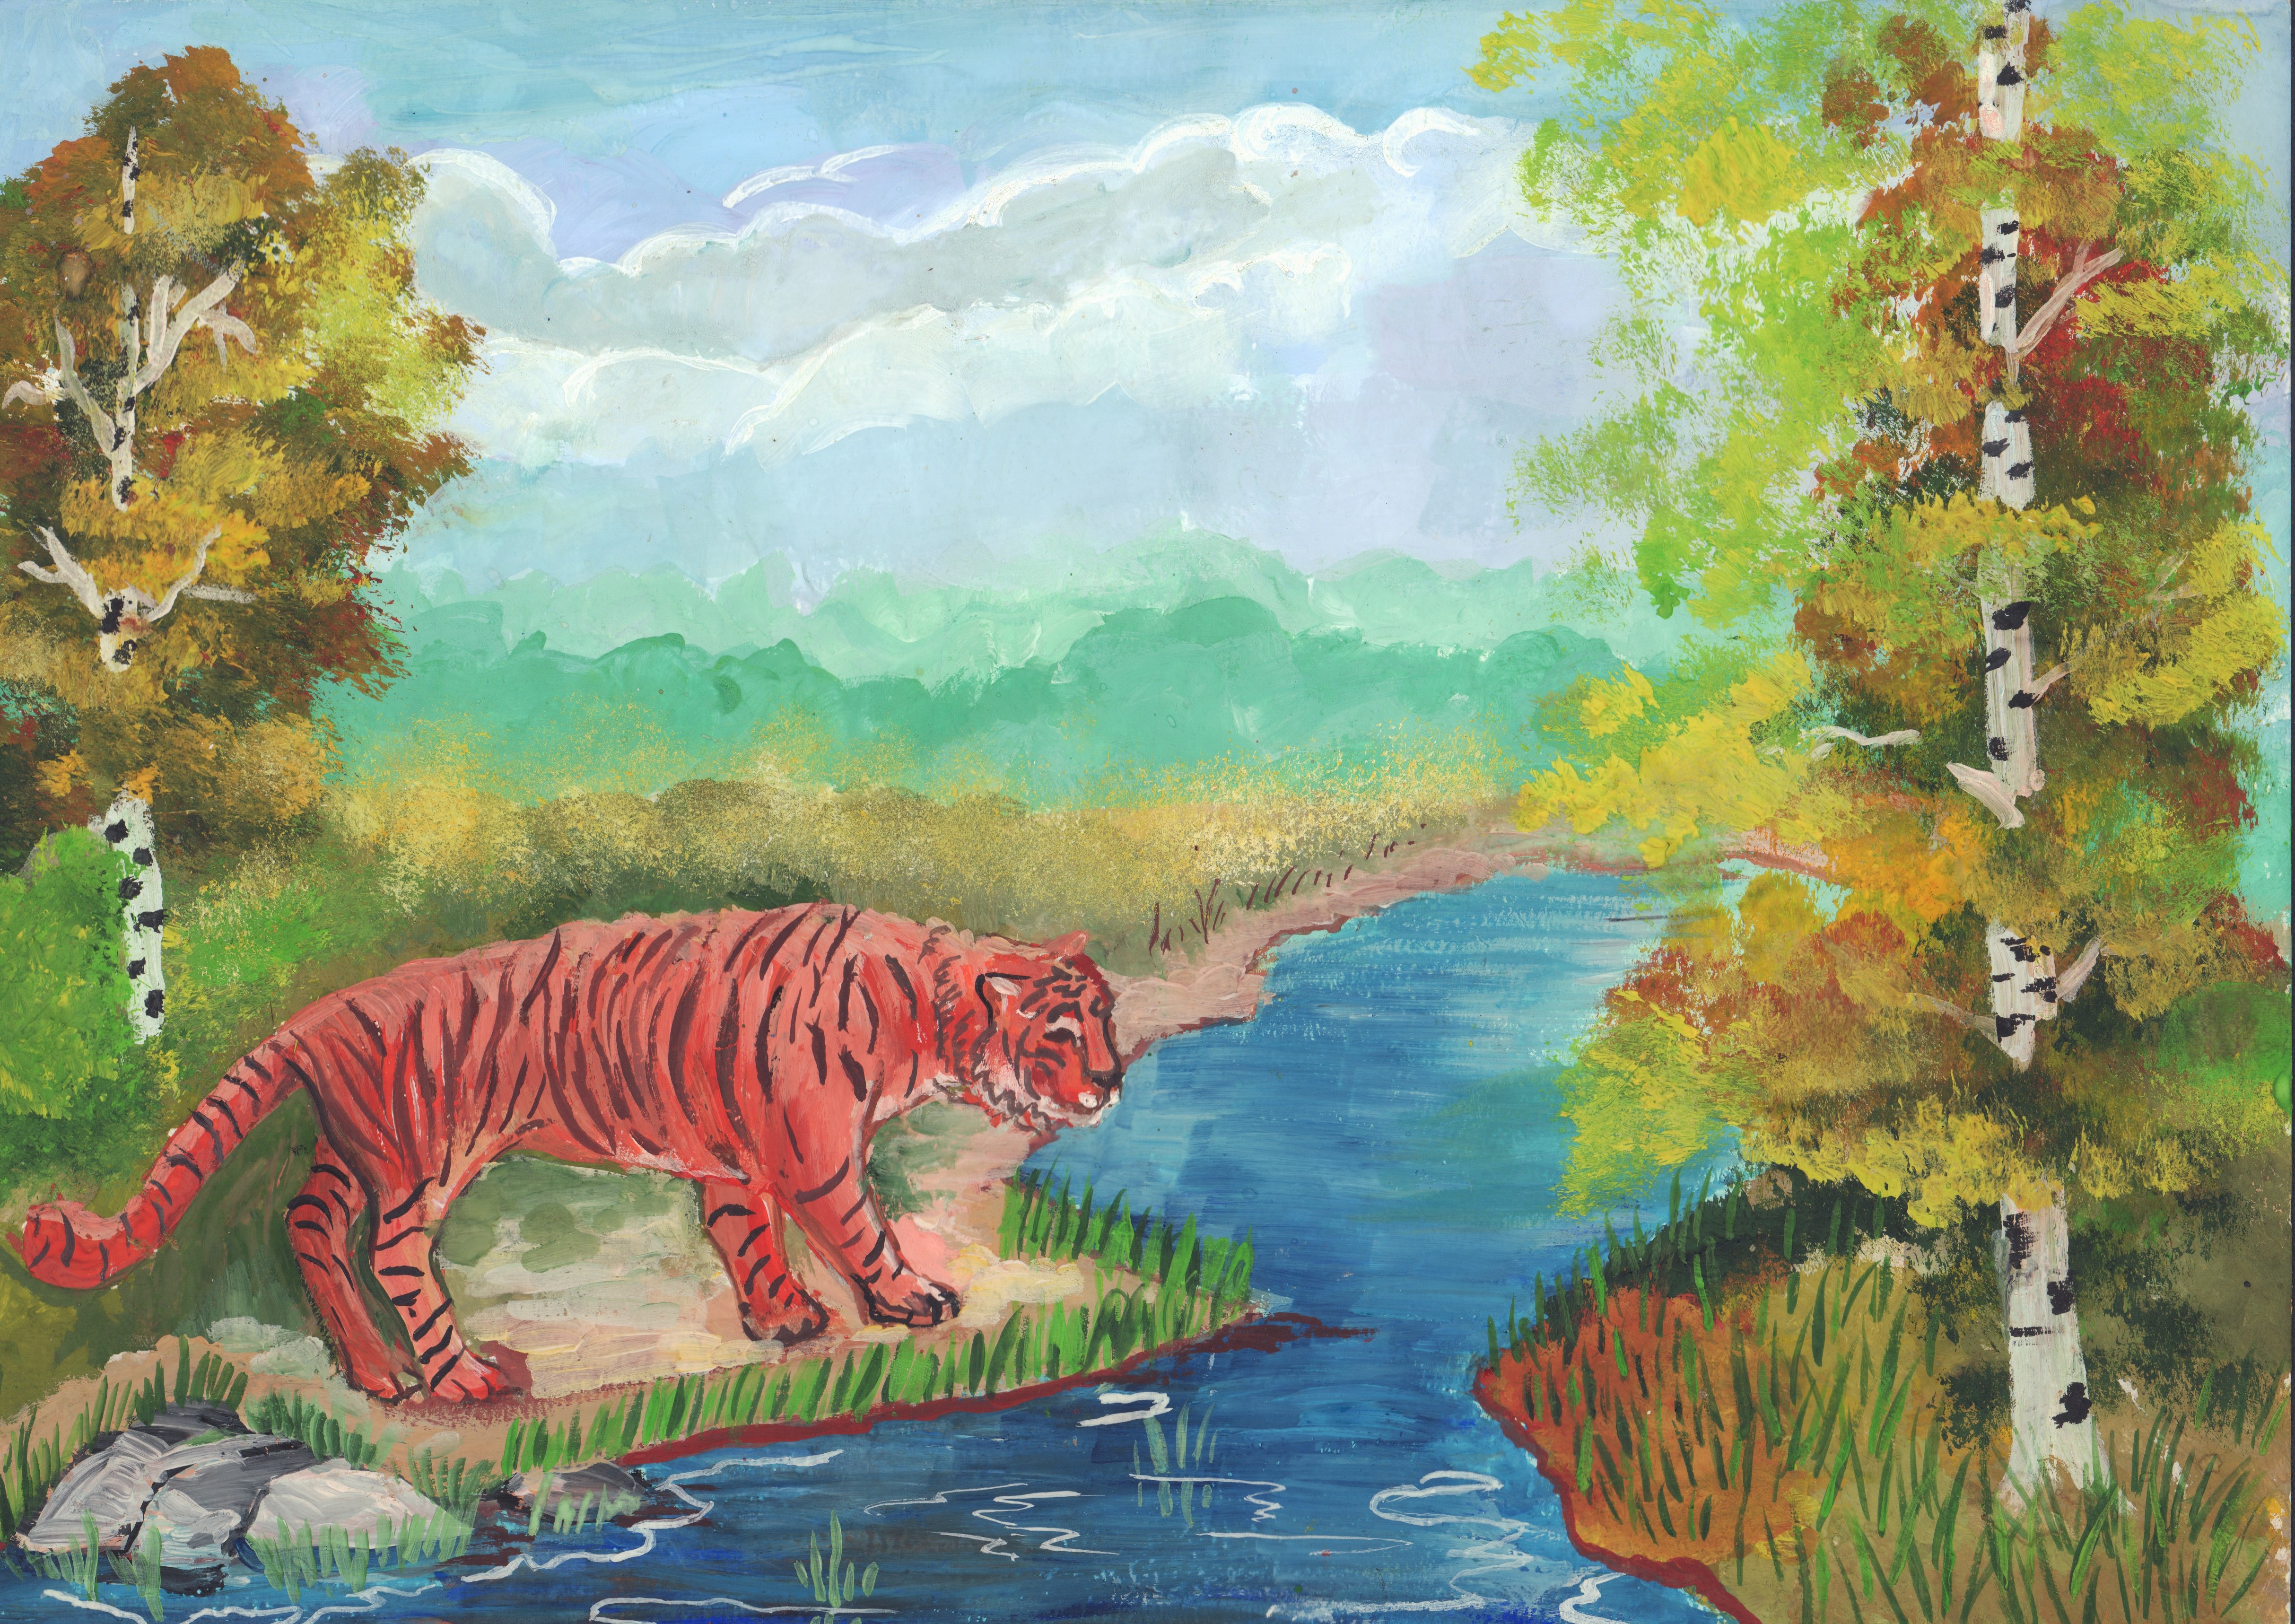 Amur tiger by Anastasia Sirotenko aged 11 from Arkhara Amurskaya Province